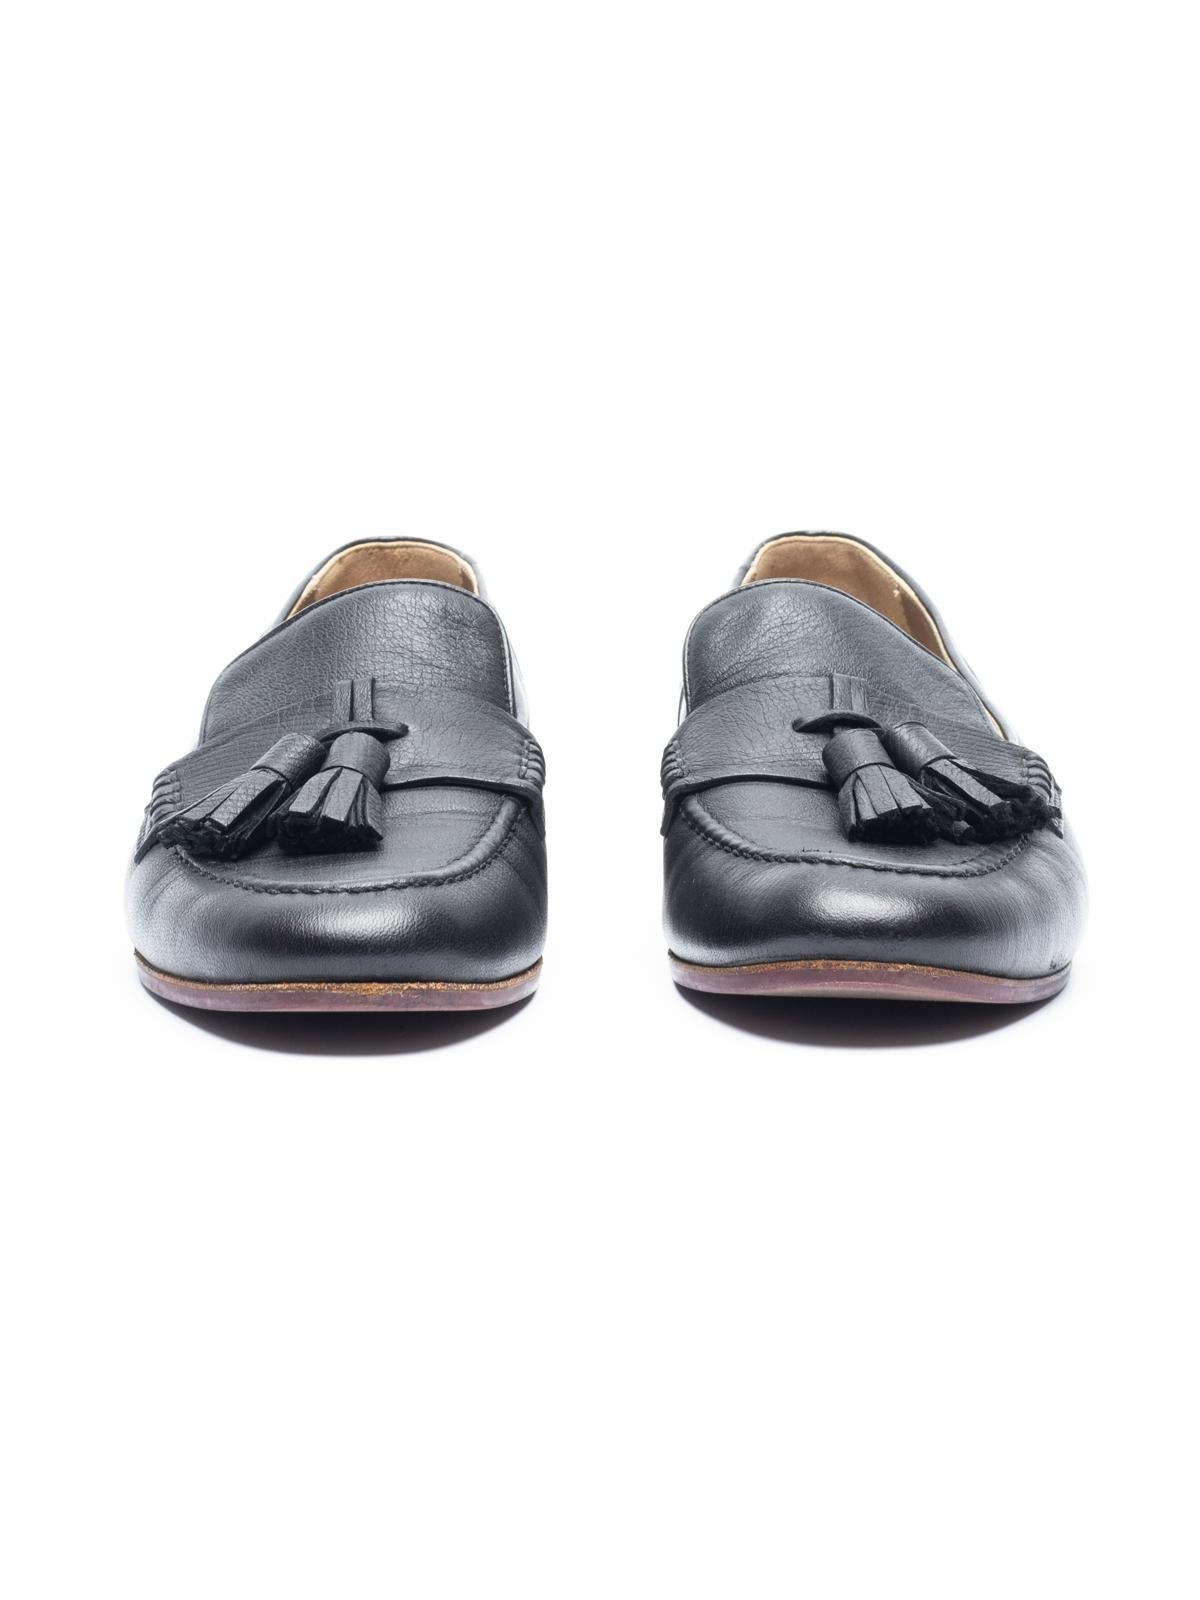 Gray Pre-Loved Lanvin Women's Navy Leather Mocassin Tassel Loafers